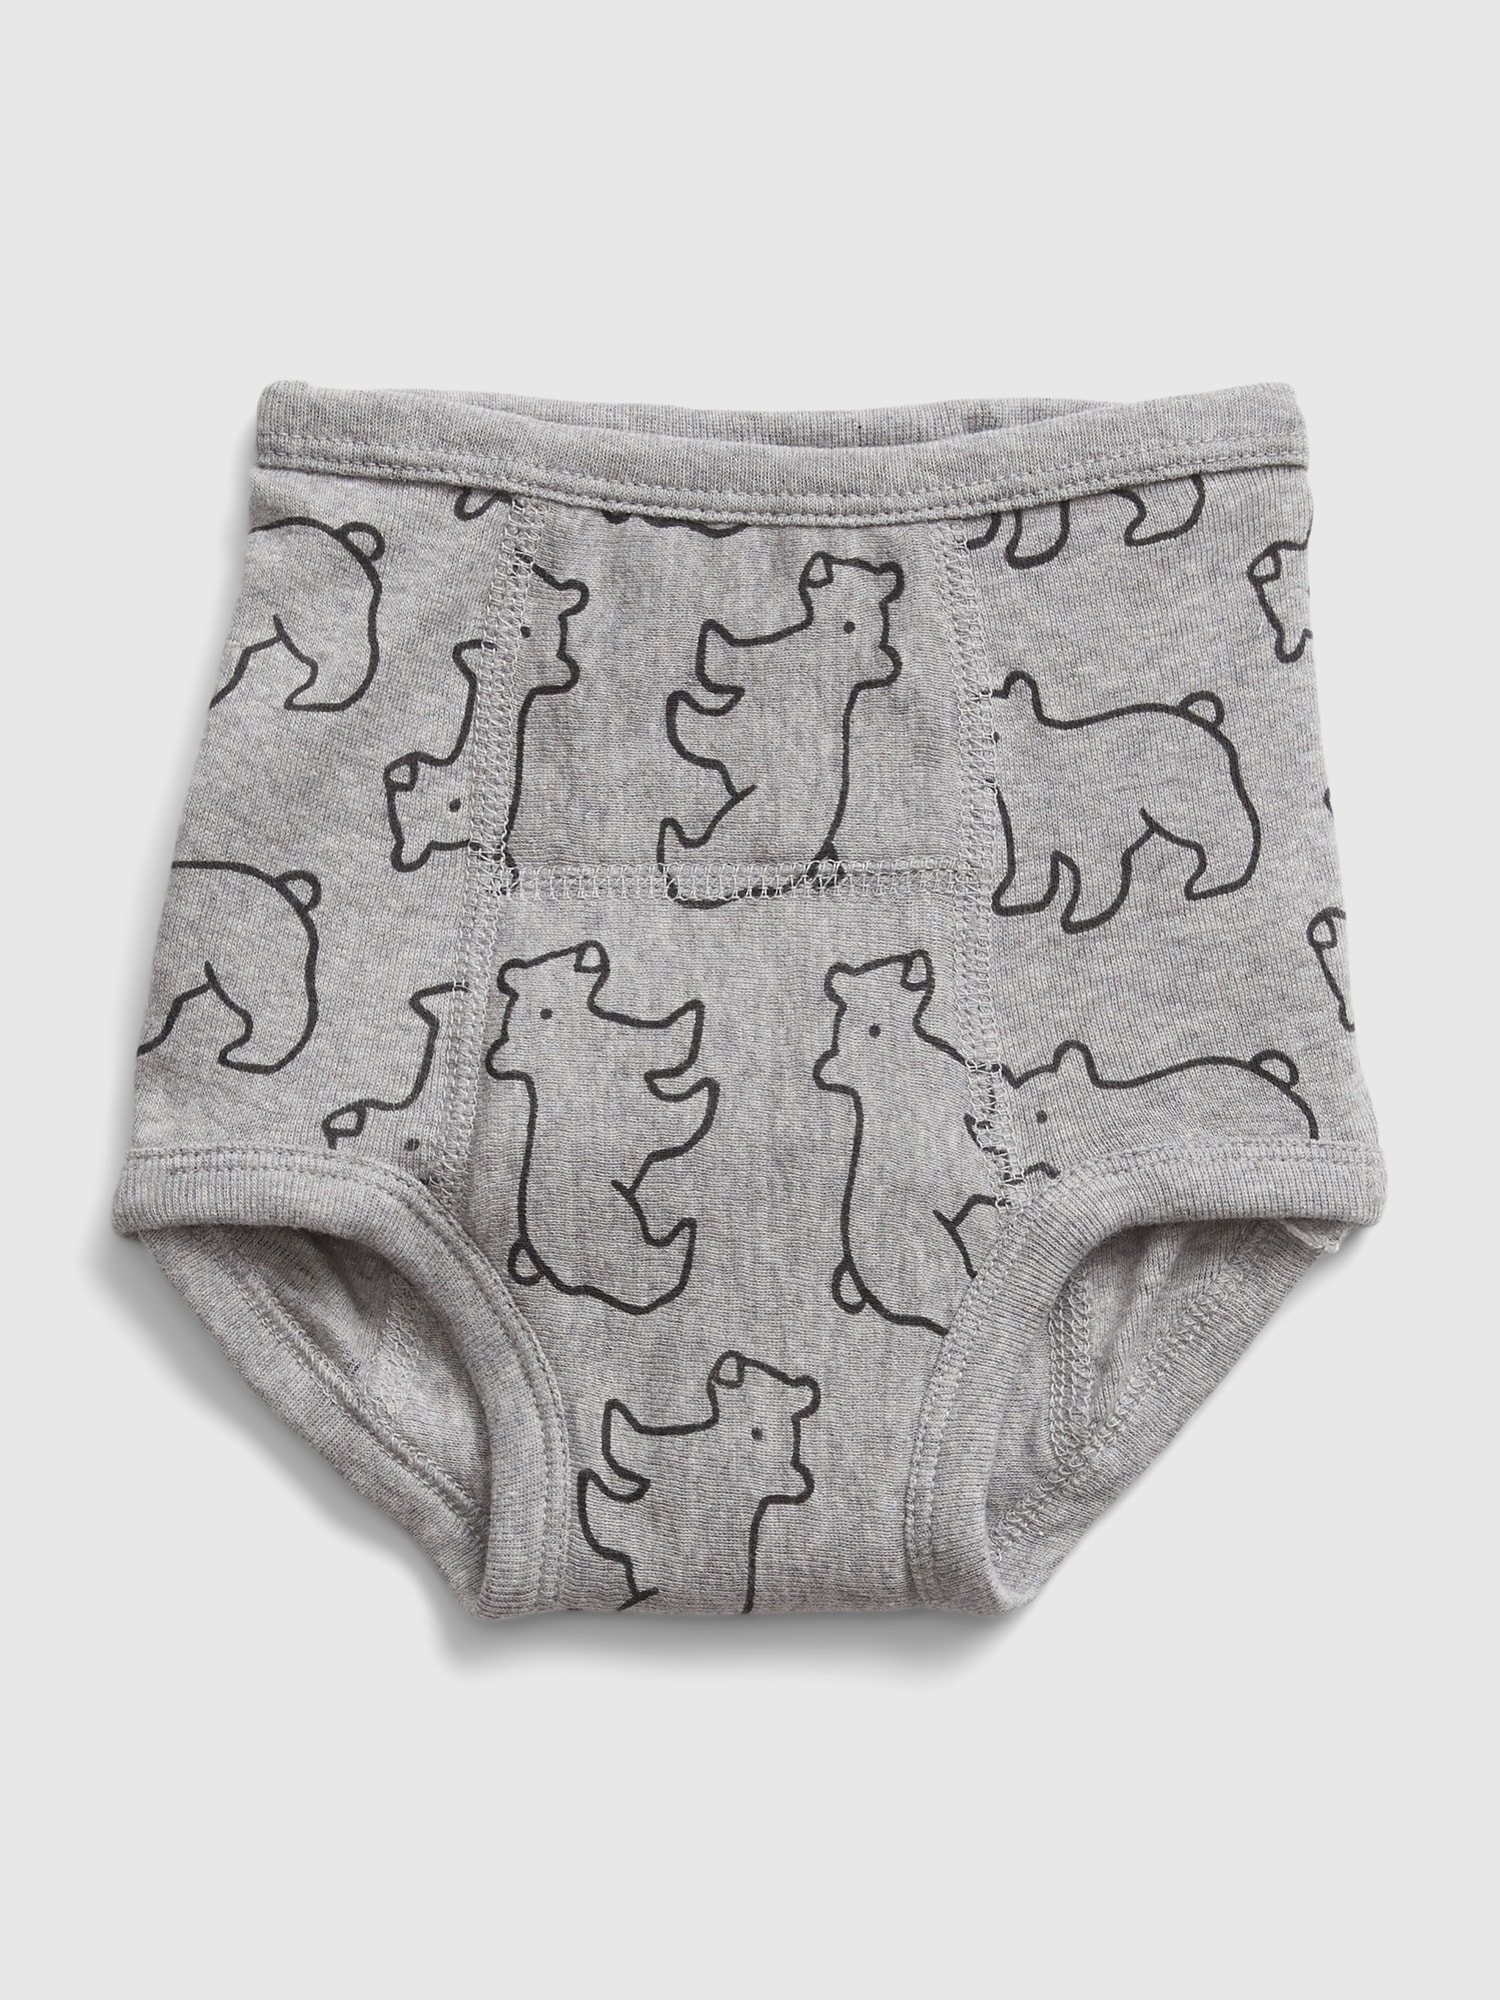 Gerber Baby-Boys Infant Toddler 4 Pack Potty Training Pants Underwear